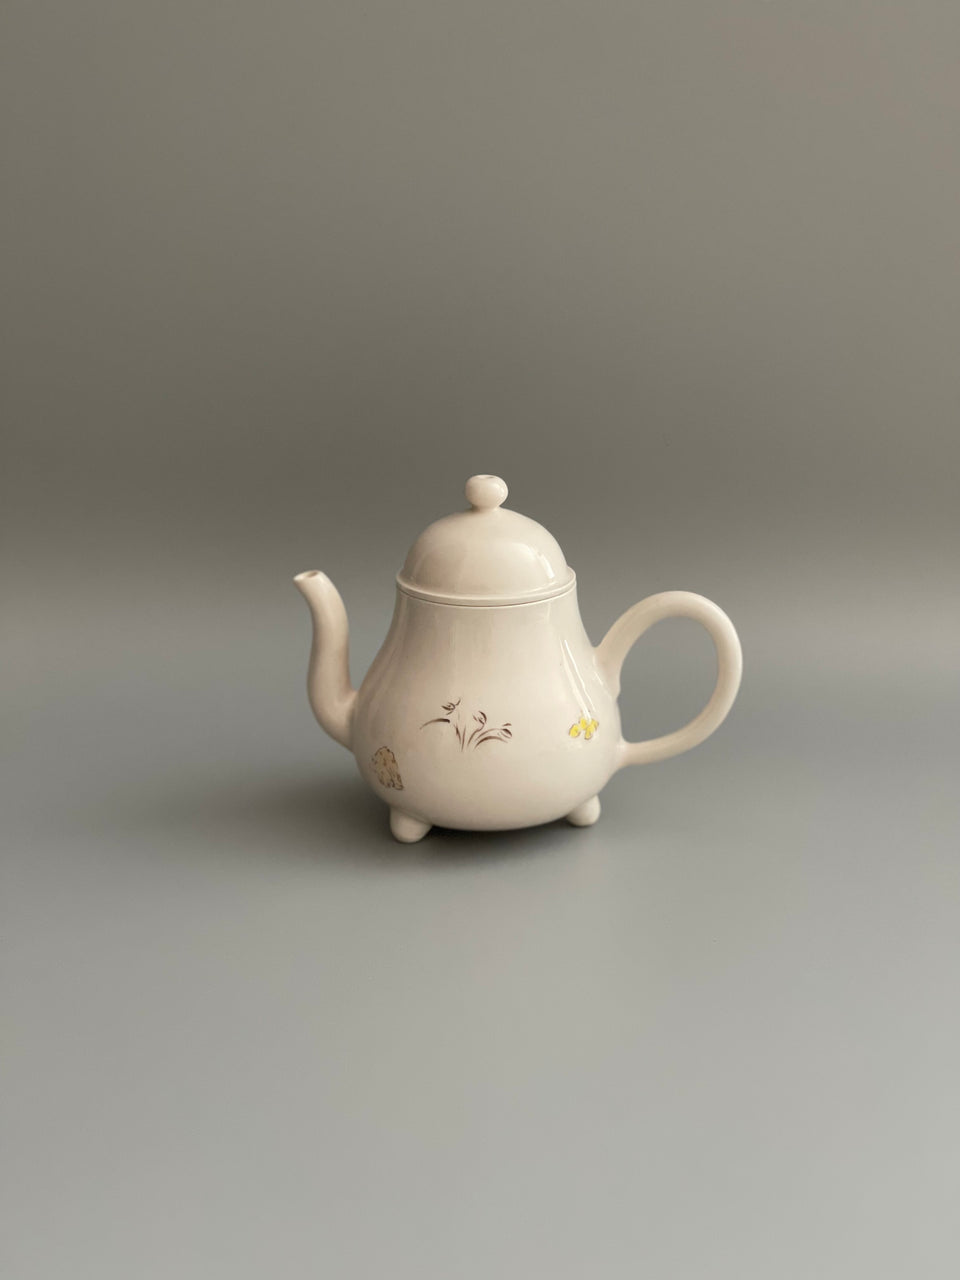 For Leisure Pear Tripod Teapot